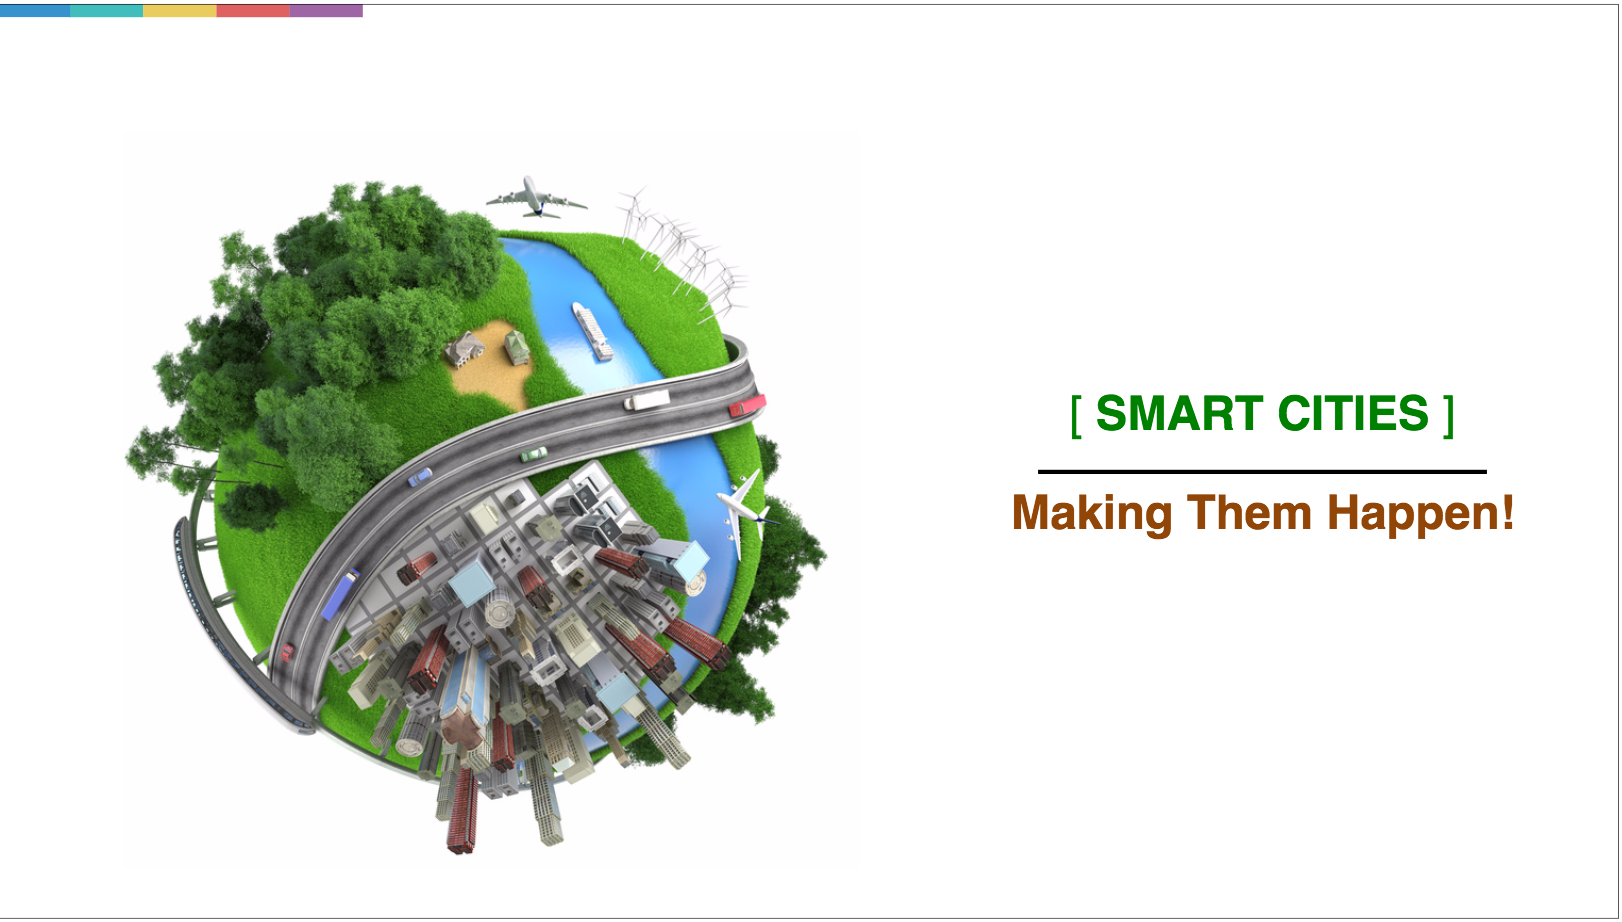 Smart Cities: Making Them Happen